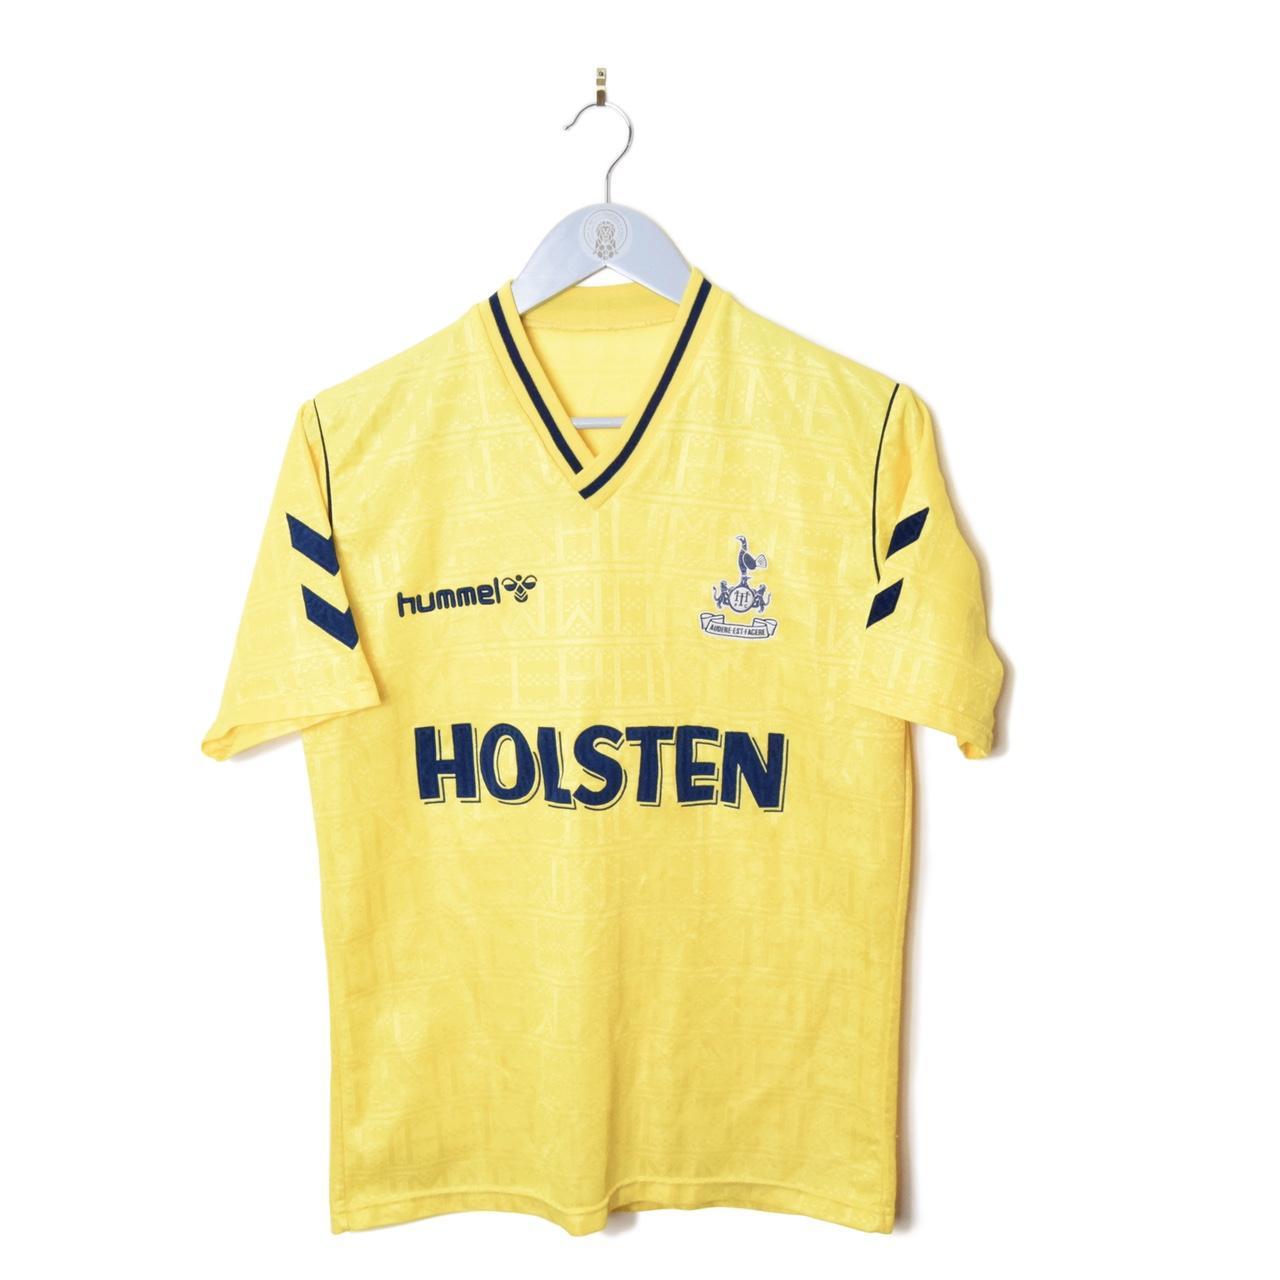 Tottenham is selling old Hummel shirts